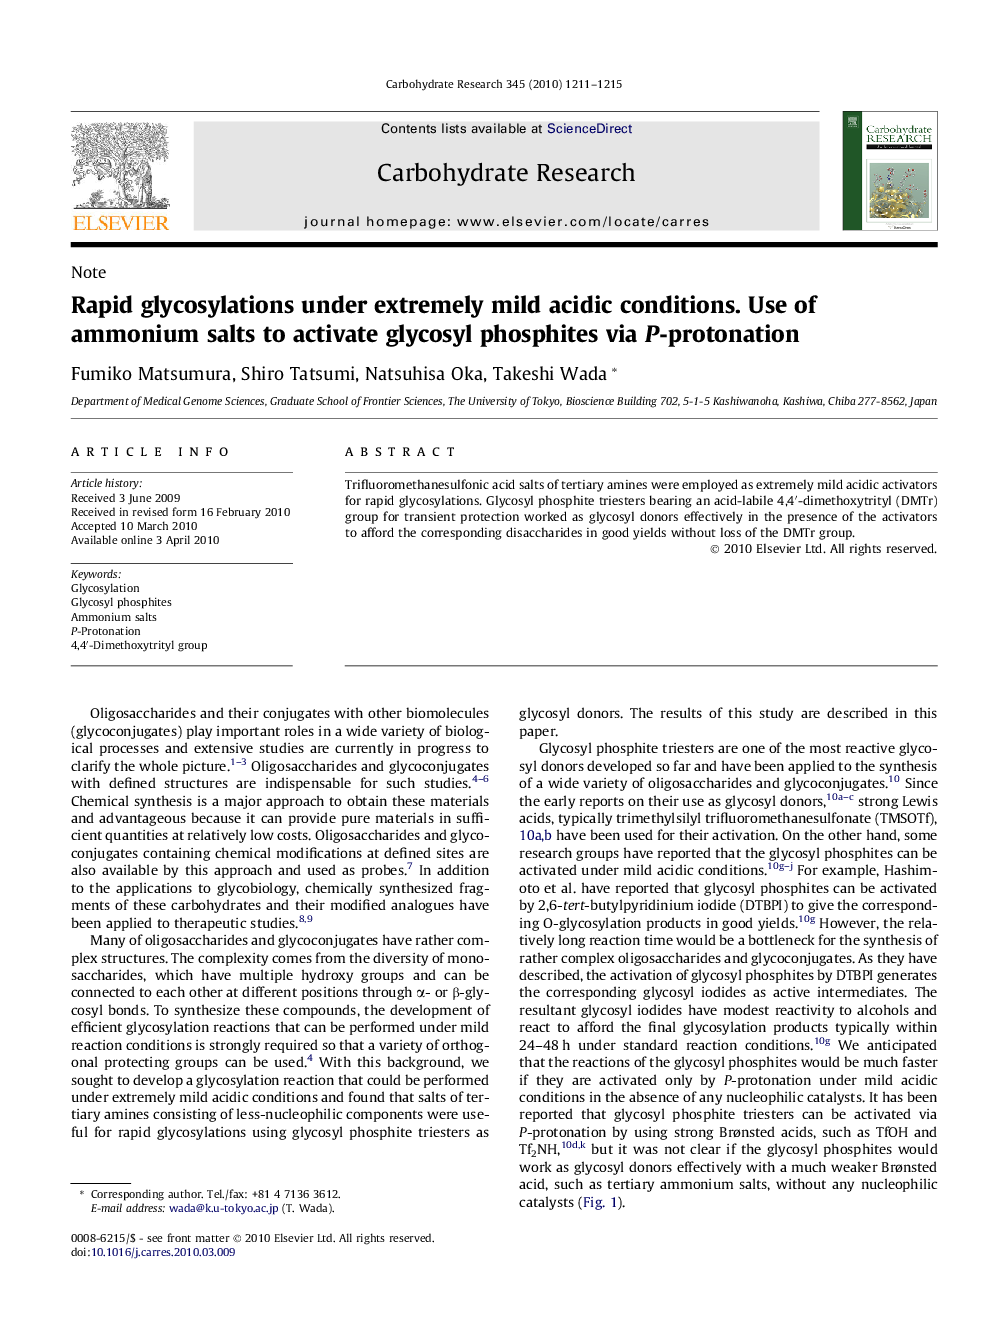 Rapid glycosylations under extremely mild acidic conditions. Use of ammonium salts to activate glycosyl phosphites via P-protonation